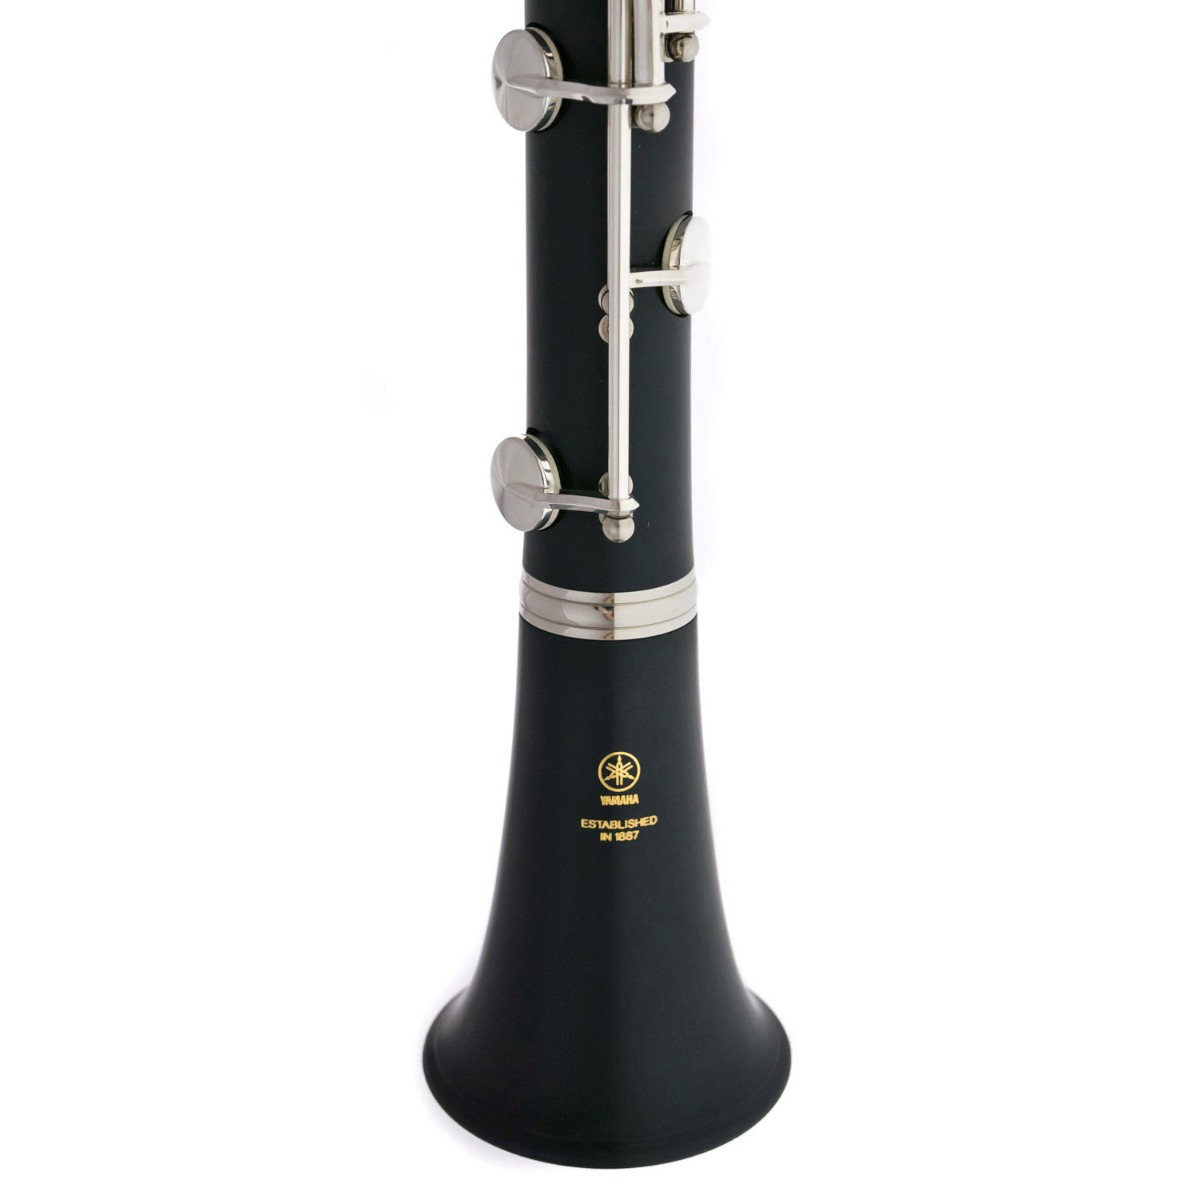 Yamaha Bb Clarinet - YCL-255 ES 